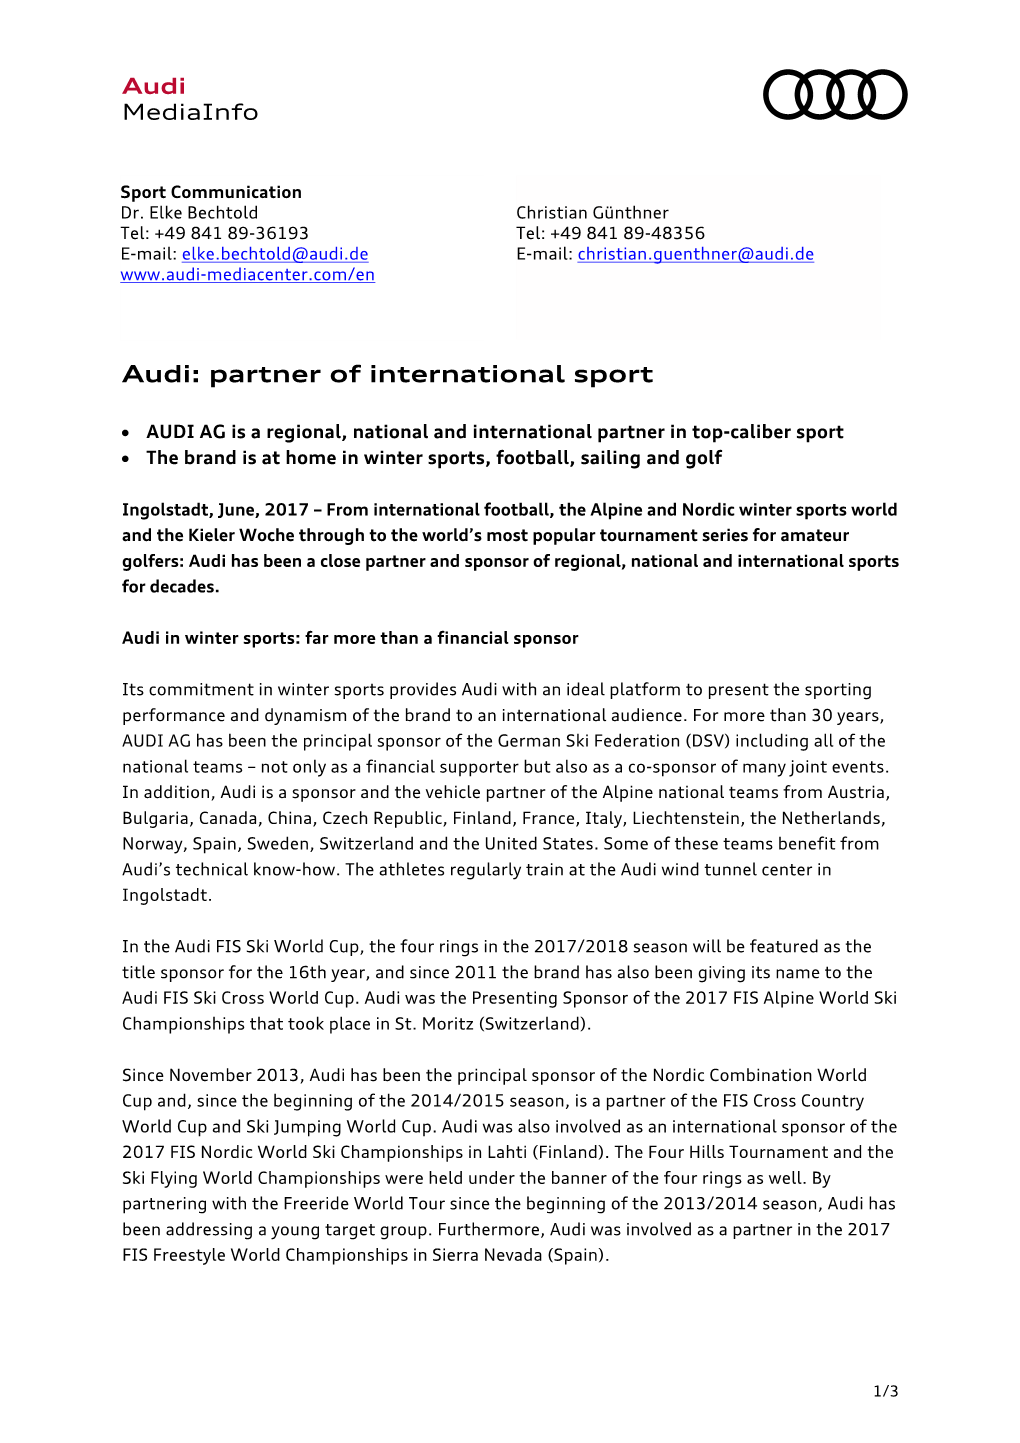 Audi: Partner of International Sport